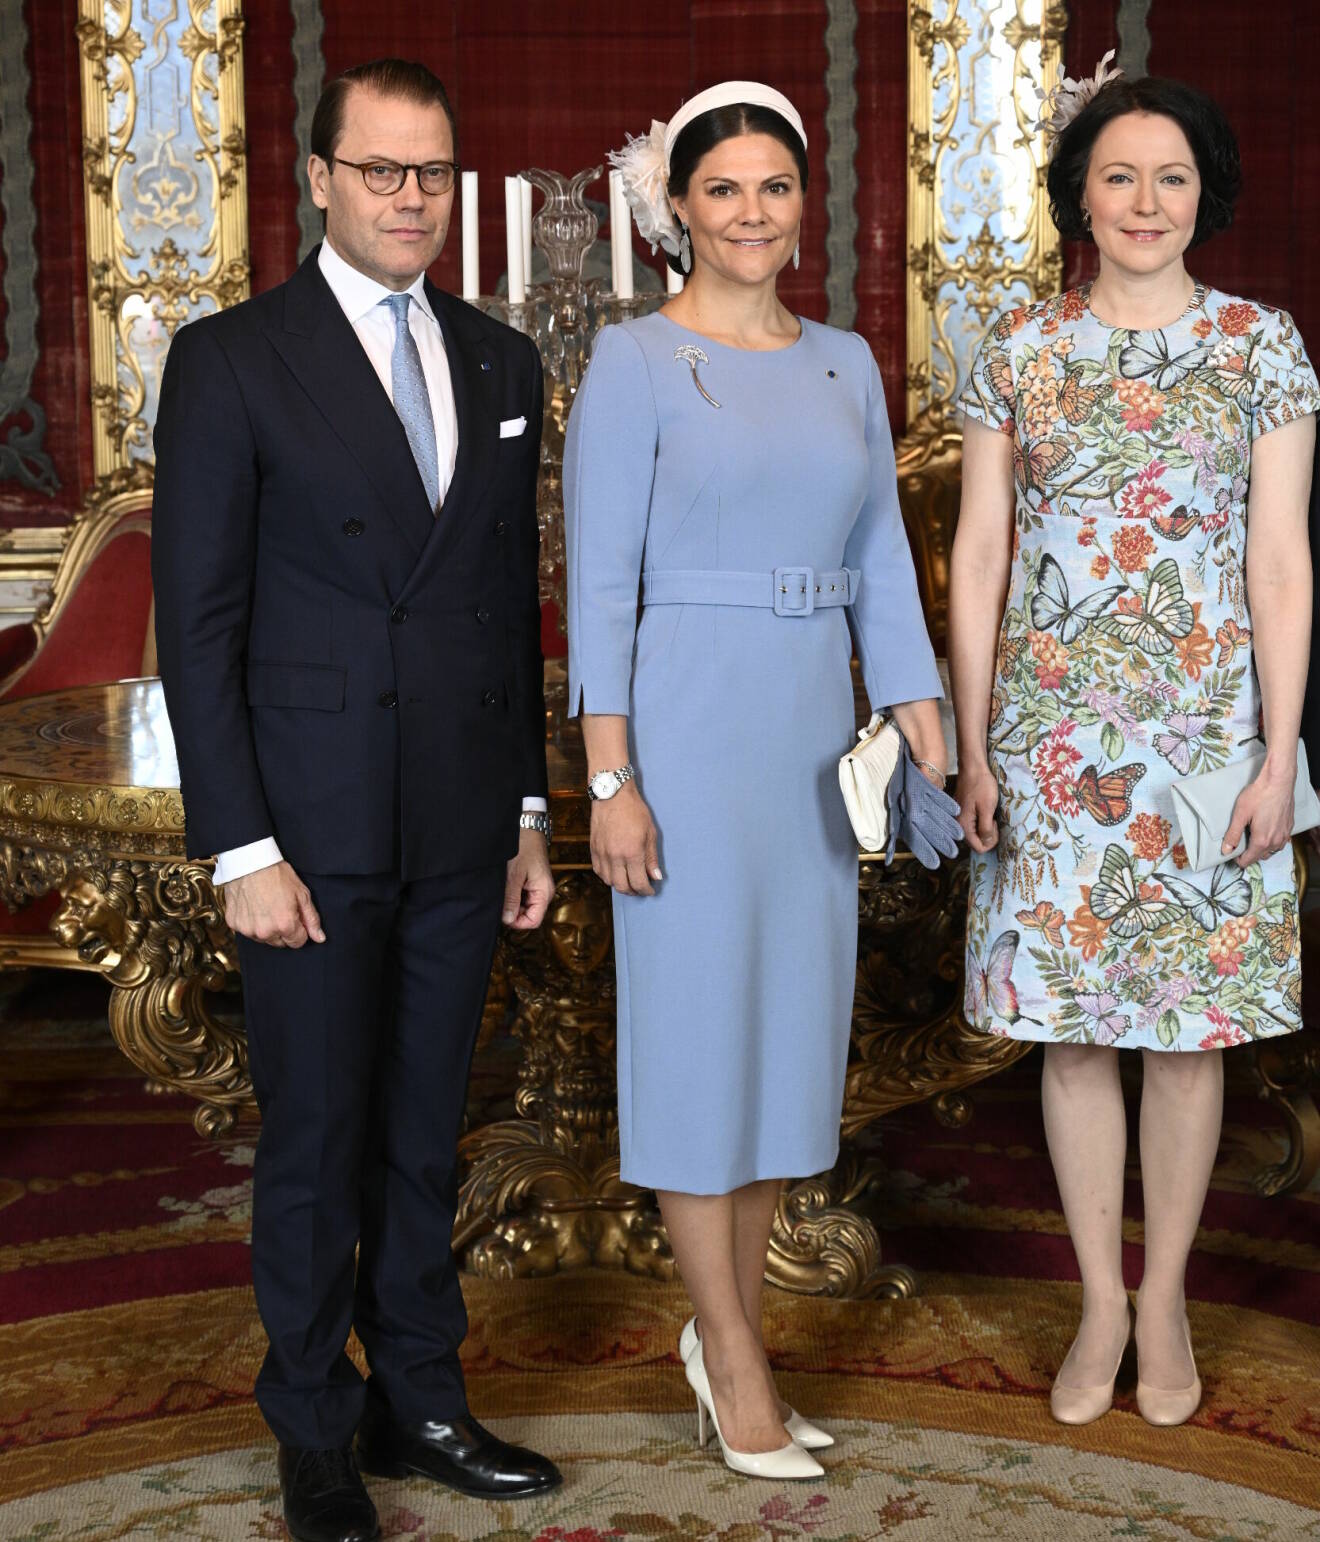 Kronprinsessan Victoria Prins Daniel och Jenni Haukio hustru till Finlands president